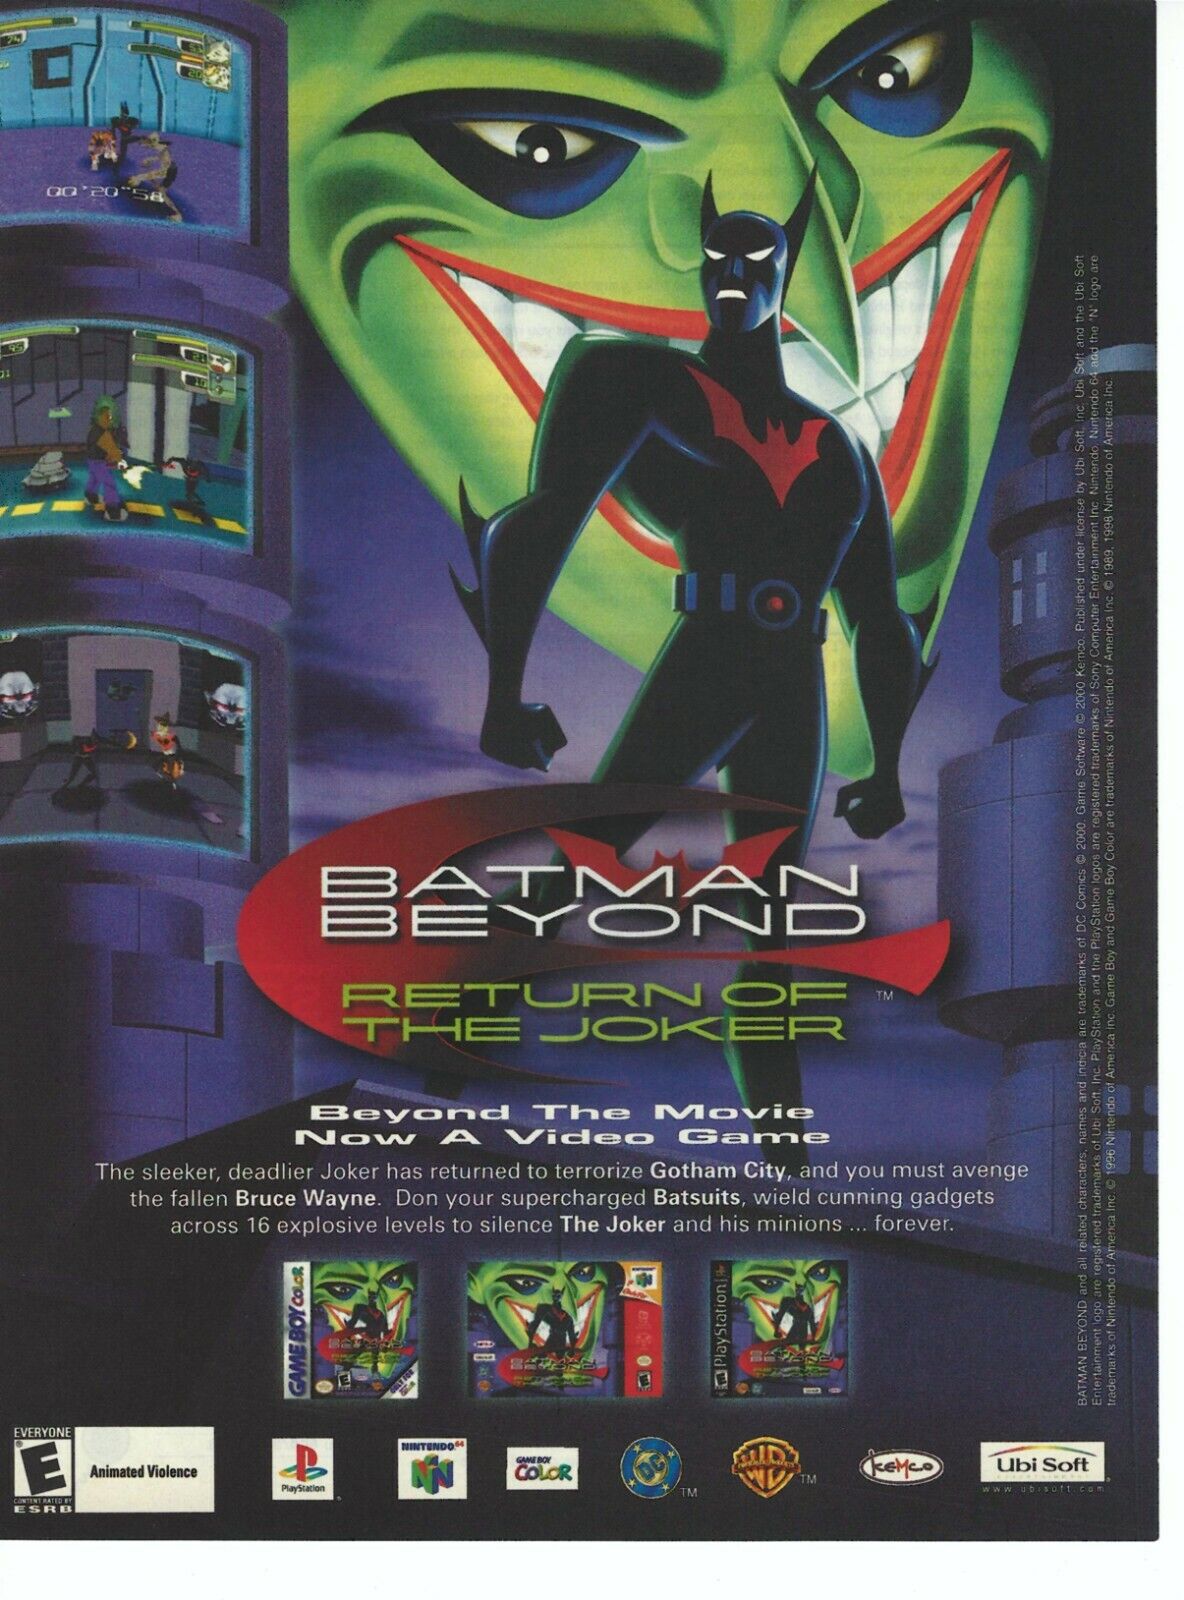 Batman Beyond: Return of the Joker Print Ad/Poster Art Playstation PS1 N64